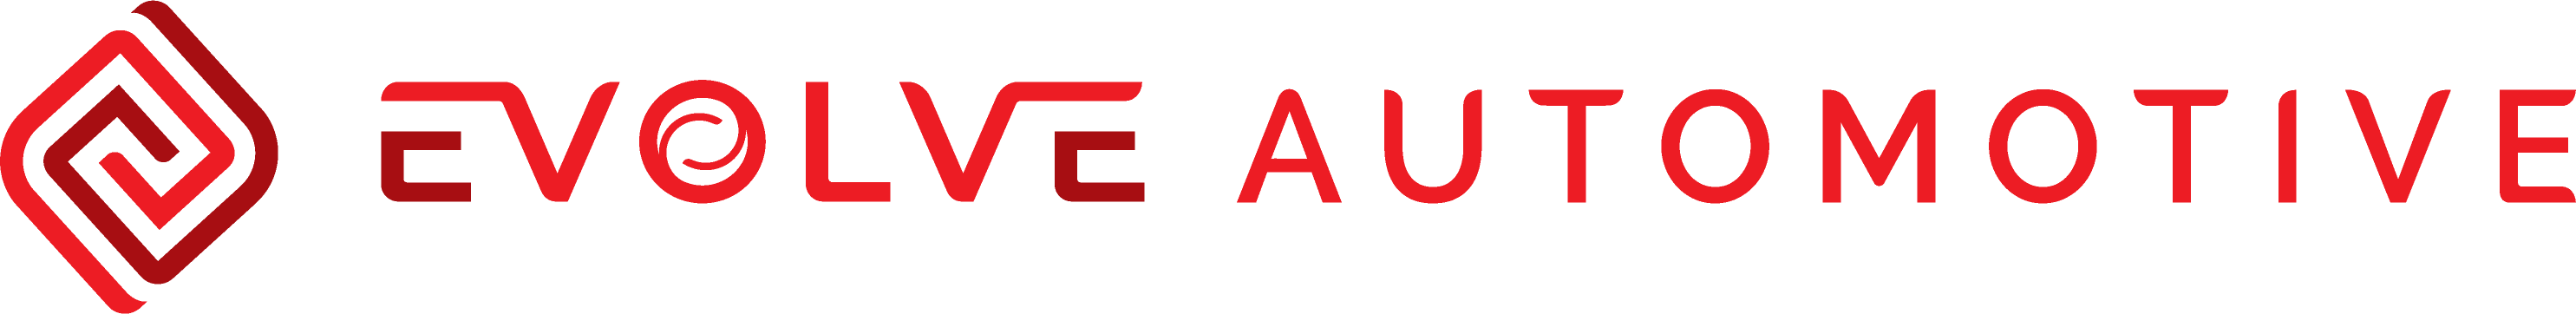 Evolve Automotive Logo